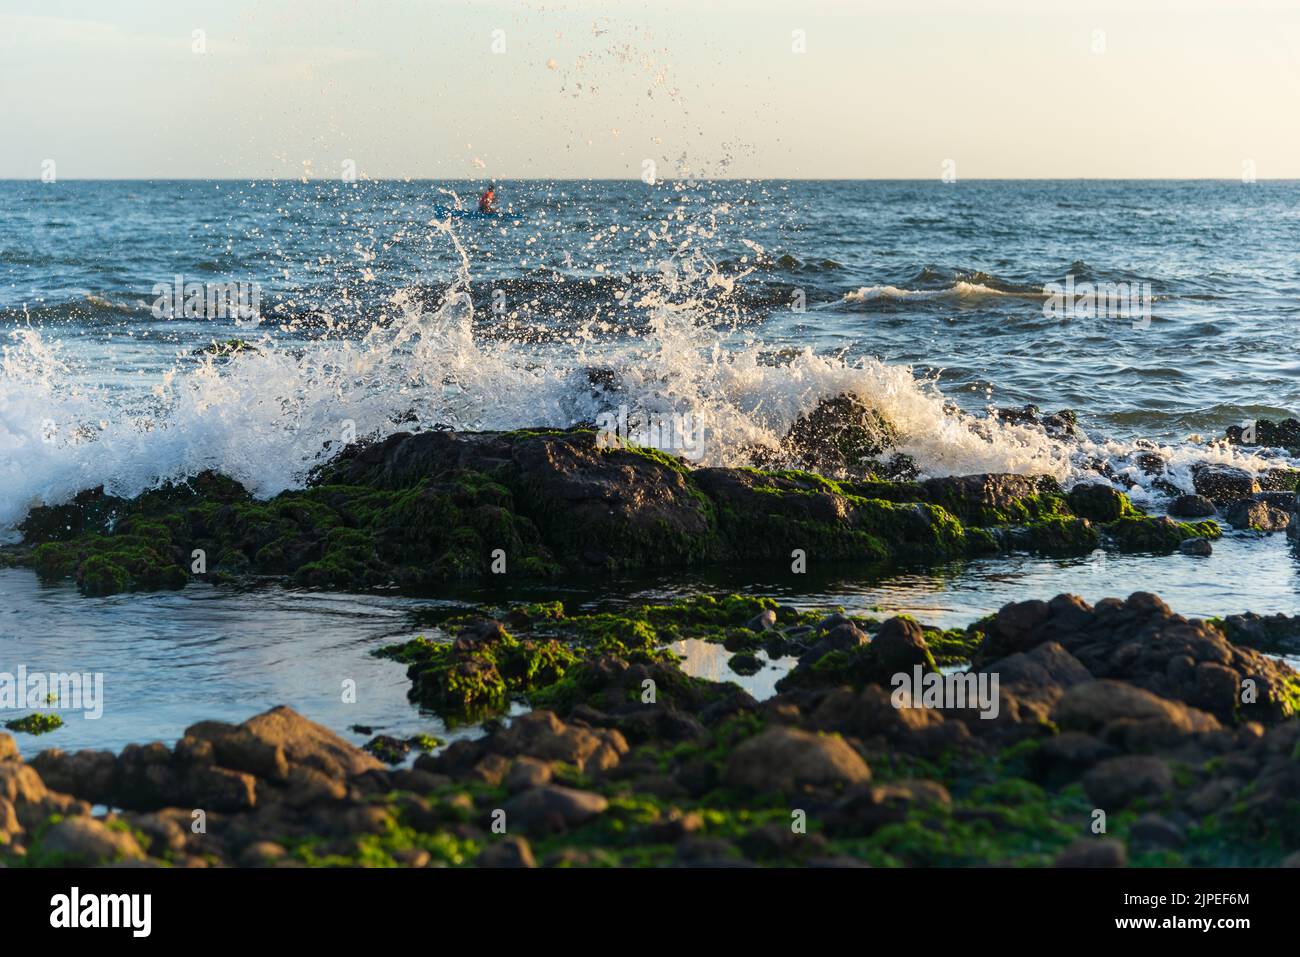 Salvador, Bahia, Brazil - December 11, 2021: Beach waves crashing on smooth and slippery rocks. Rio Vermelho beach in Salvador, Brazil. Stock Photo